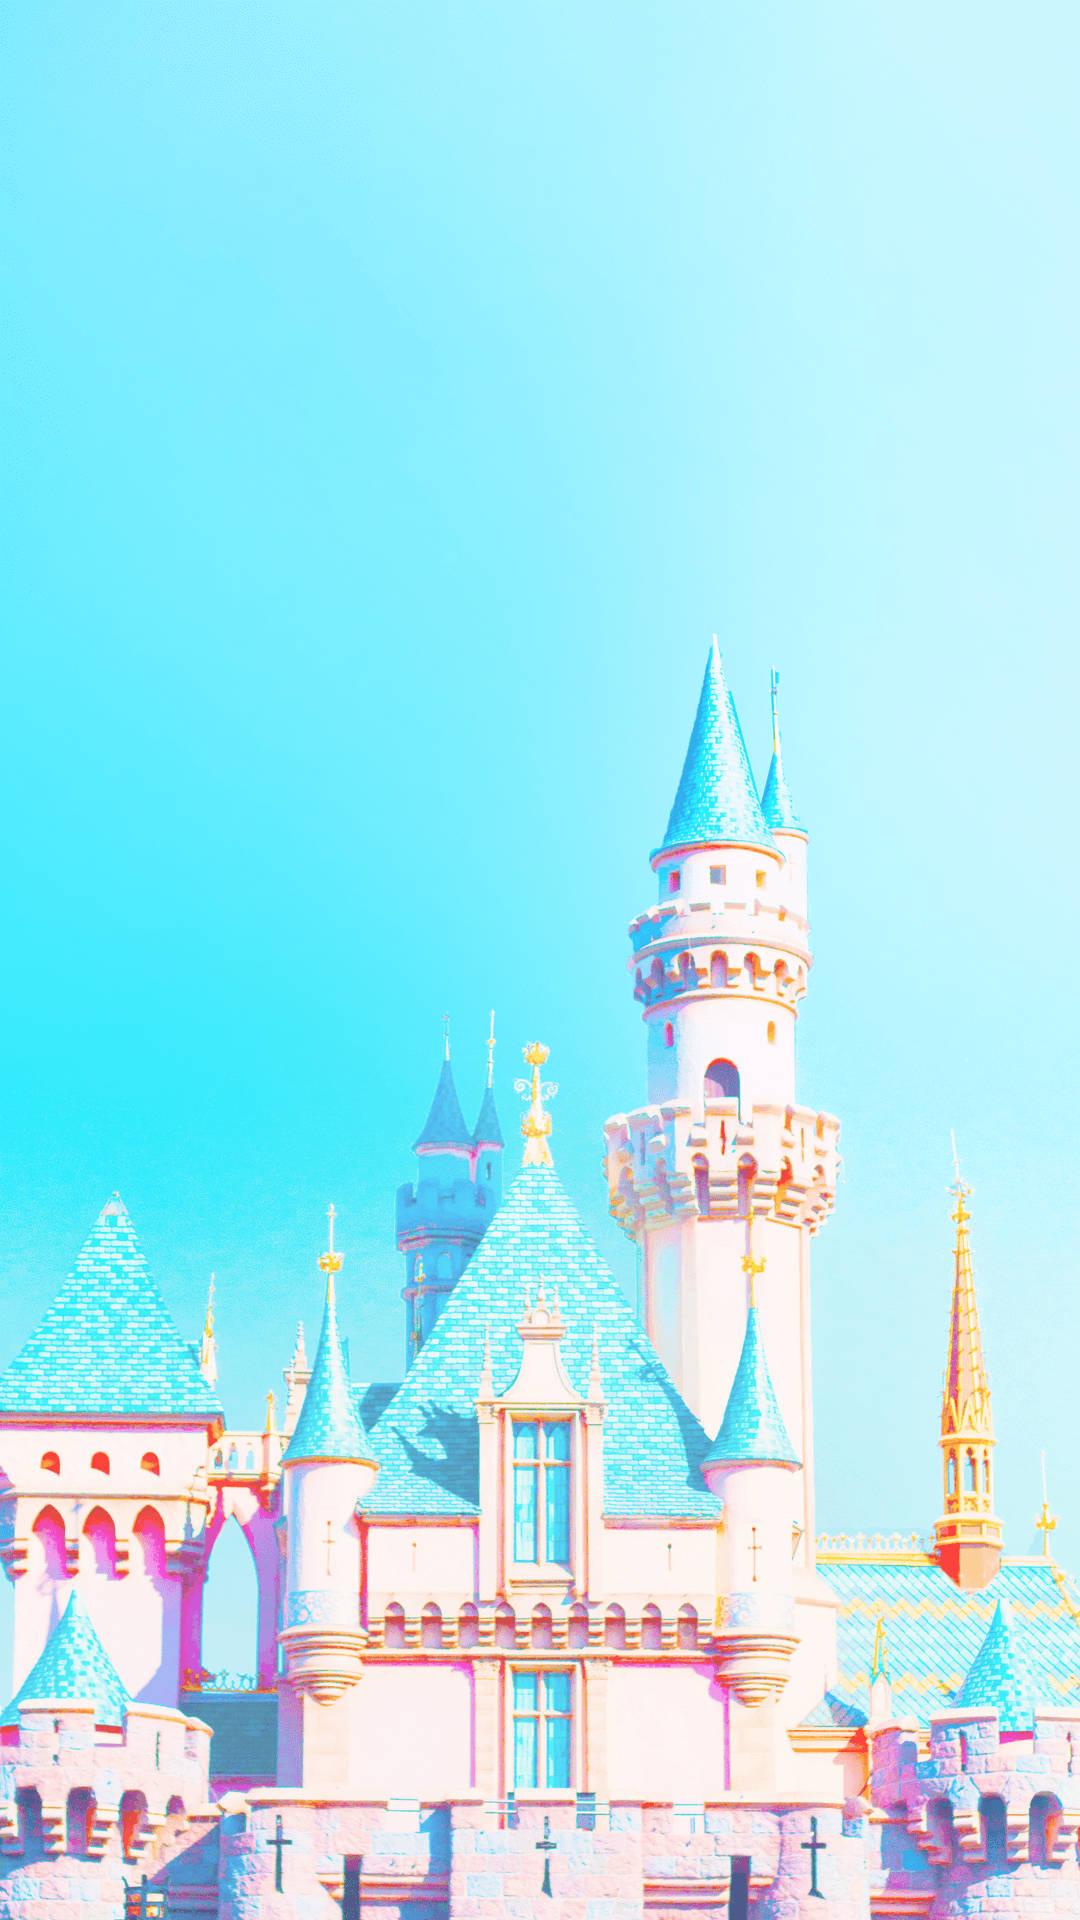 Dreamy Pastel-colored Disney Castle Picture